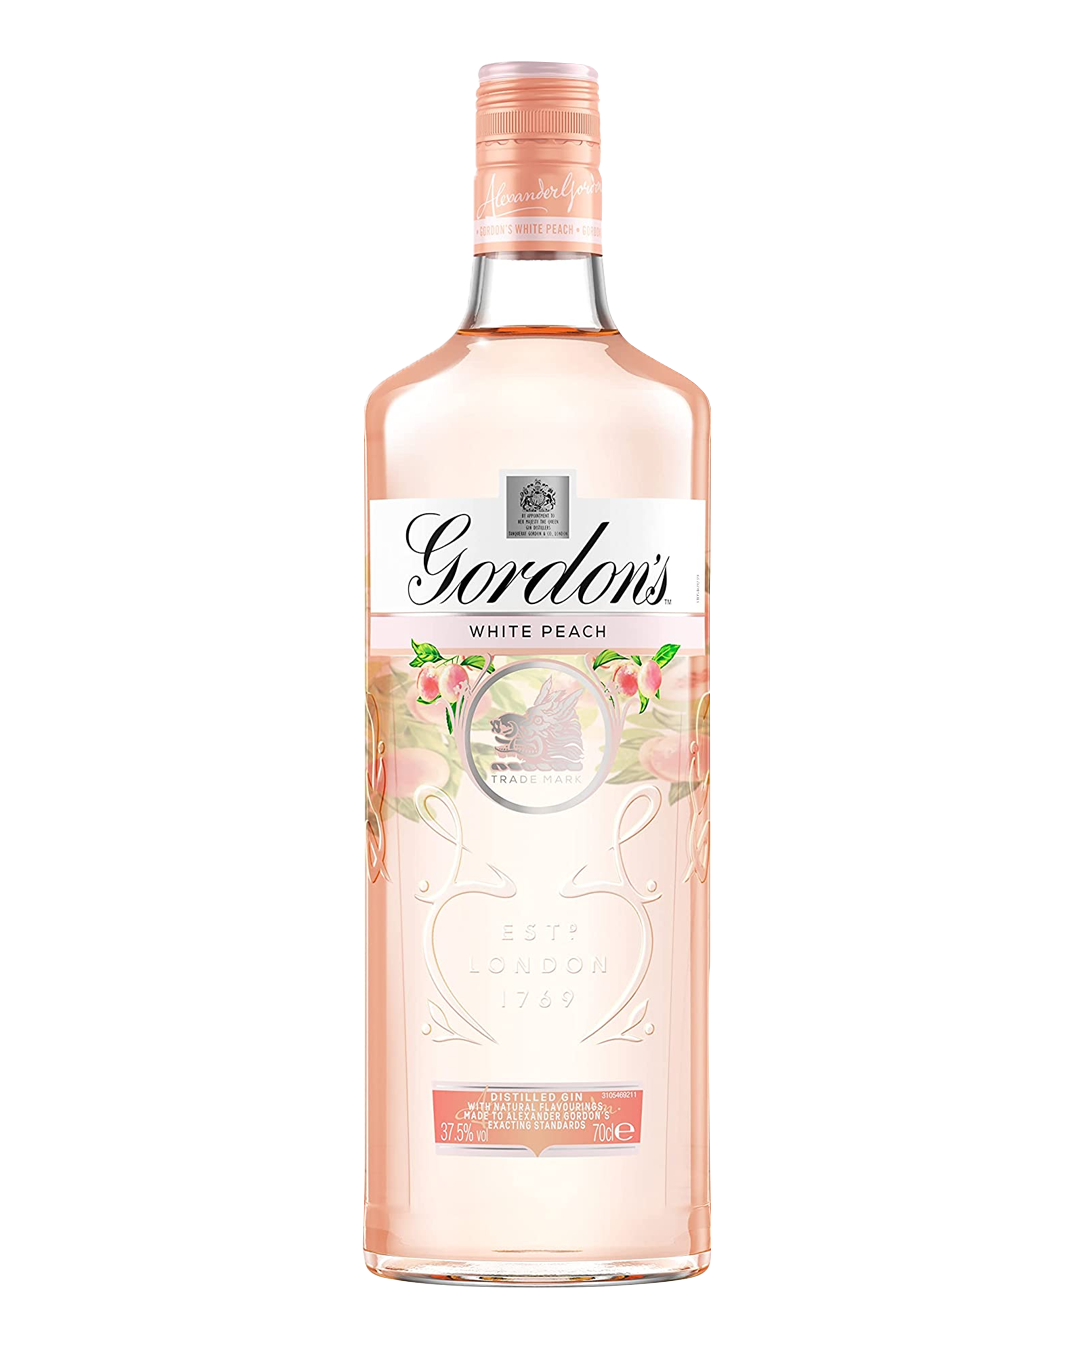 Gordon's Gin 70 cl, 37.5%